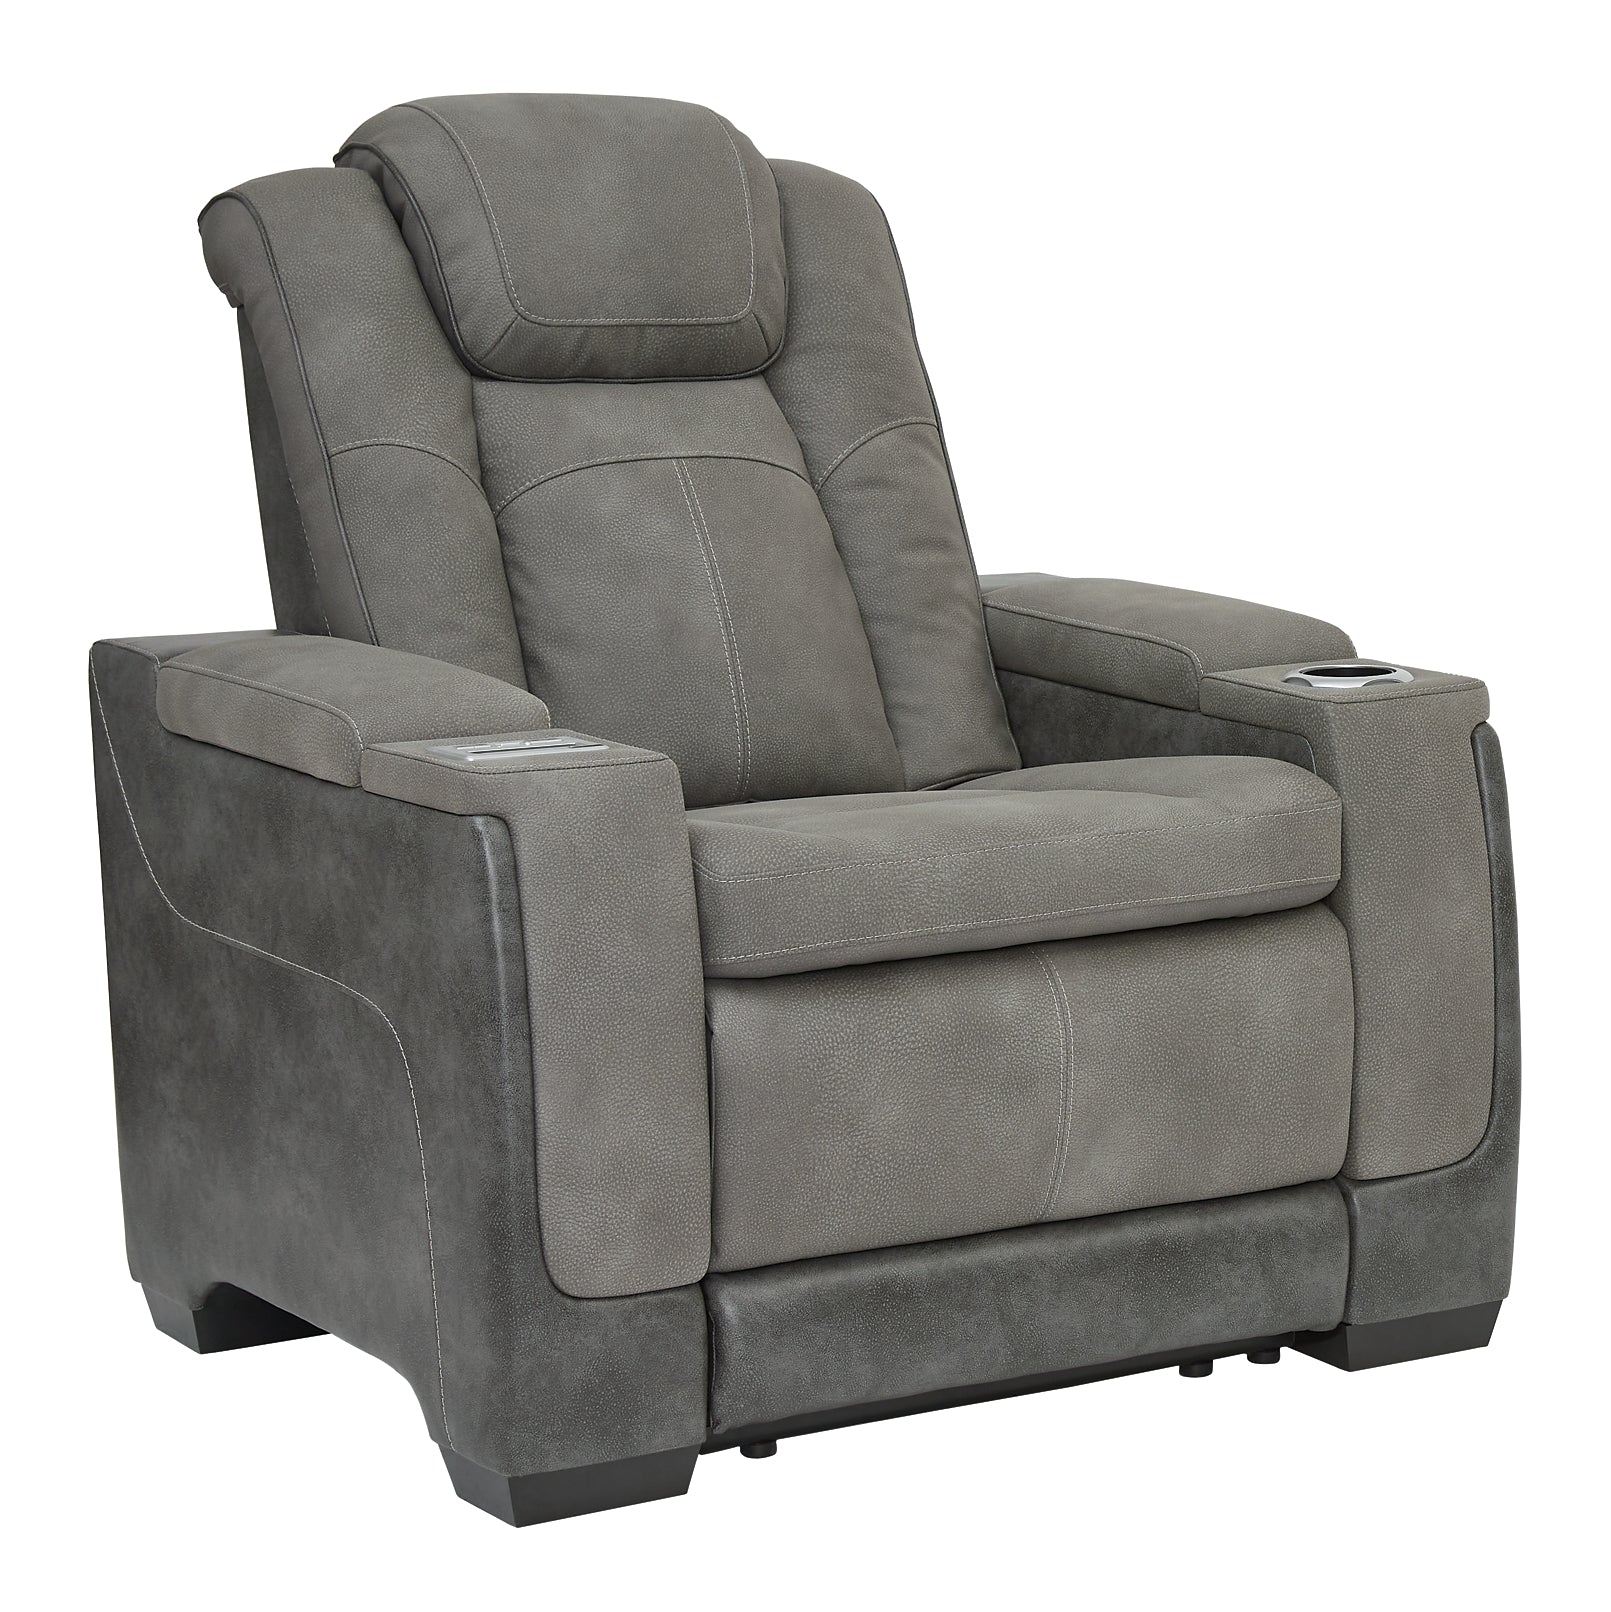 Next-Gen DuraPella PWR Recliner/ADJ Headrest at Cloud 9 Mattress & Furniture furniture, home furnishing, home decor